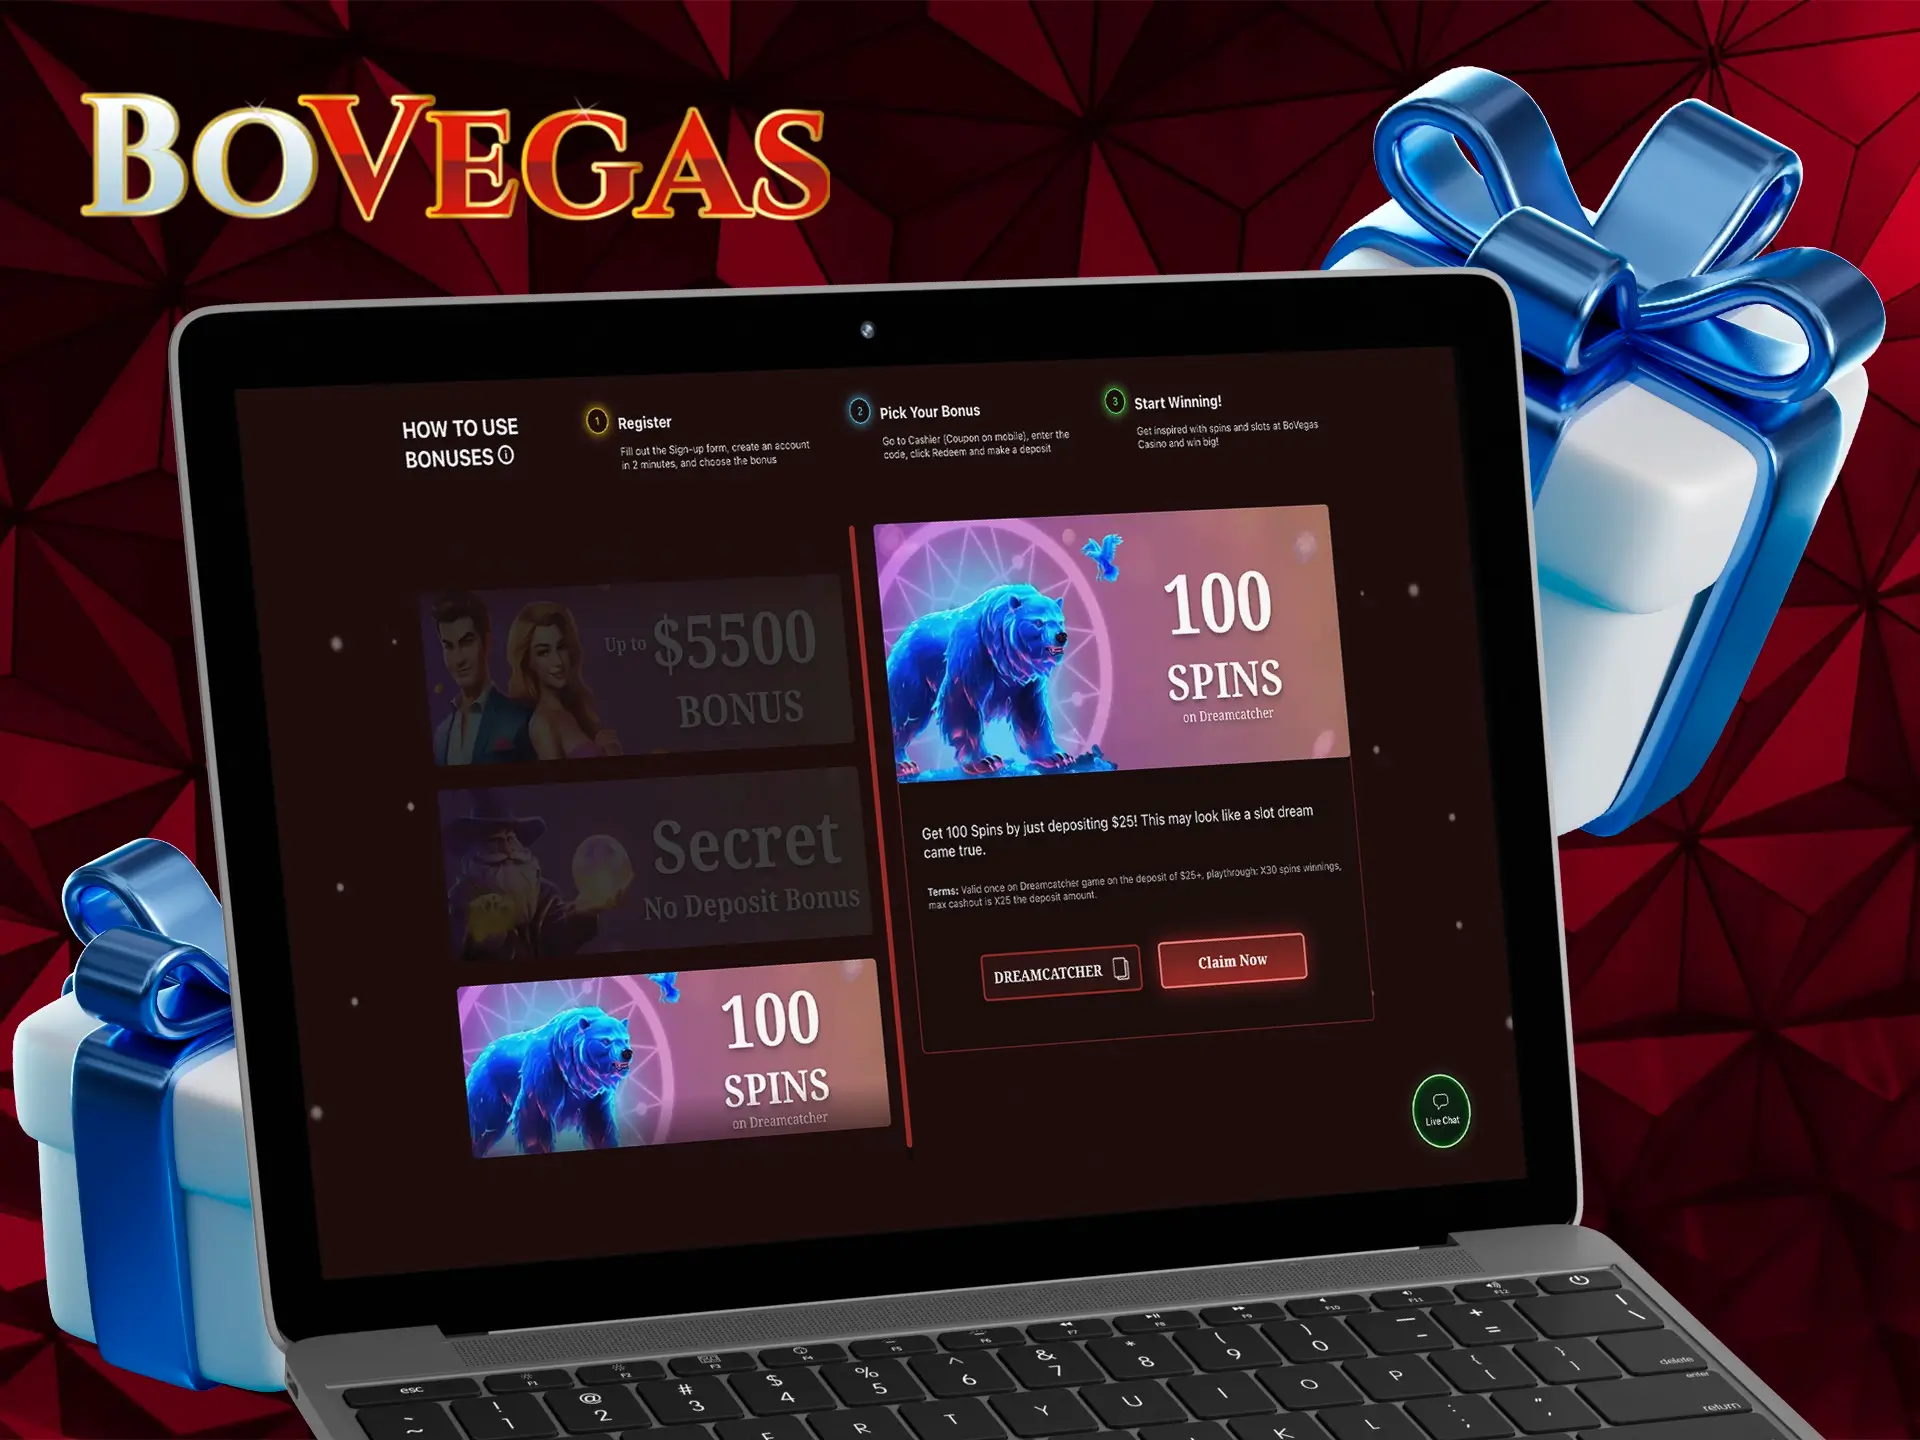 Explore what casino bonuses a user from Australia can get using BoVegas bonus codes.